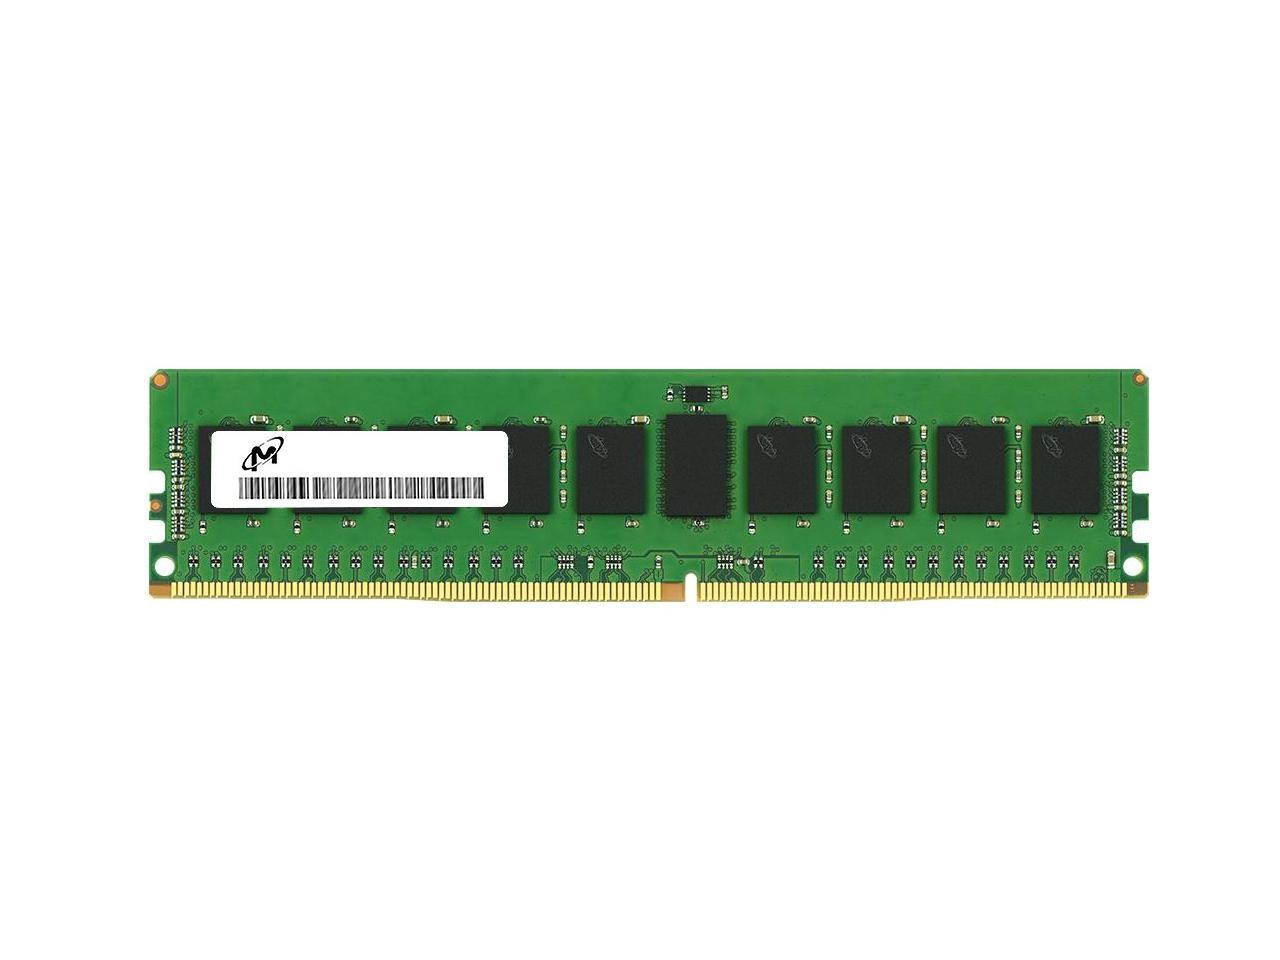 8GB DDR4 2133MHZ PC4-17000 260-PIN NON-ECC UNBUFFERED DUAL RANK 1.2V SODIMM  NOTEBOOK MEMORY MTA16ATF1G64HZ-2G1A2